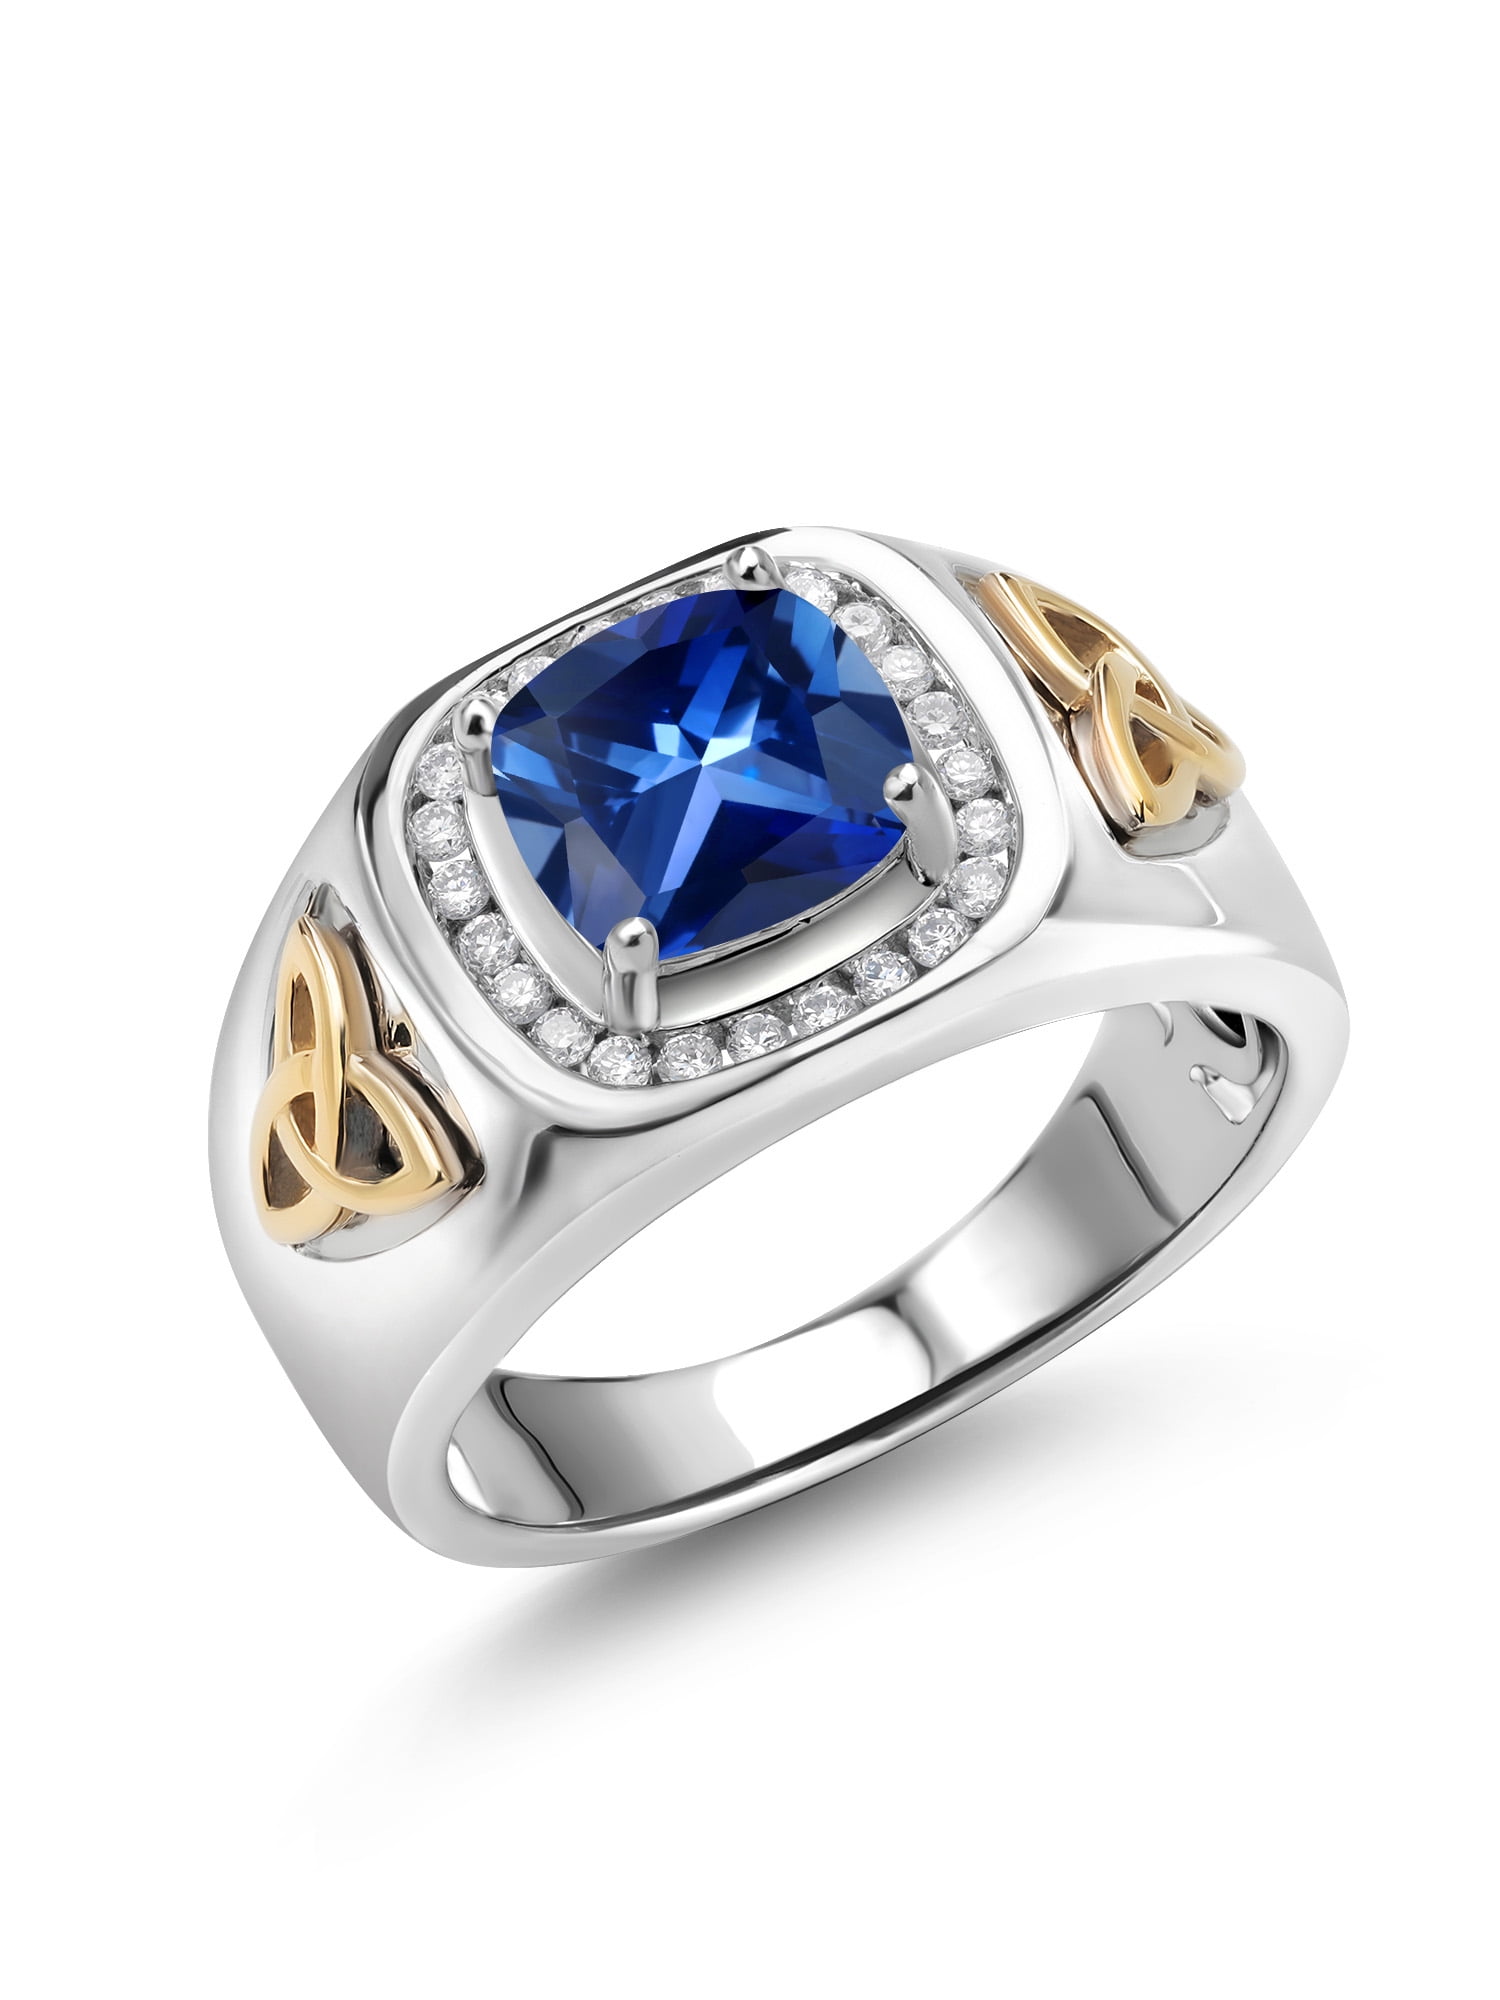 Mens Wedding Rings Blue Sapphire Gemstones rings 14K Gold Diamond Ring (Blue/I-J/NA/I1-I2)  – Glitz Design